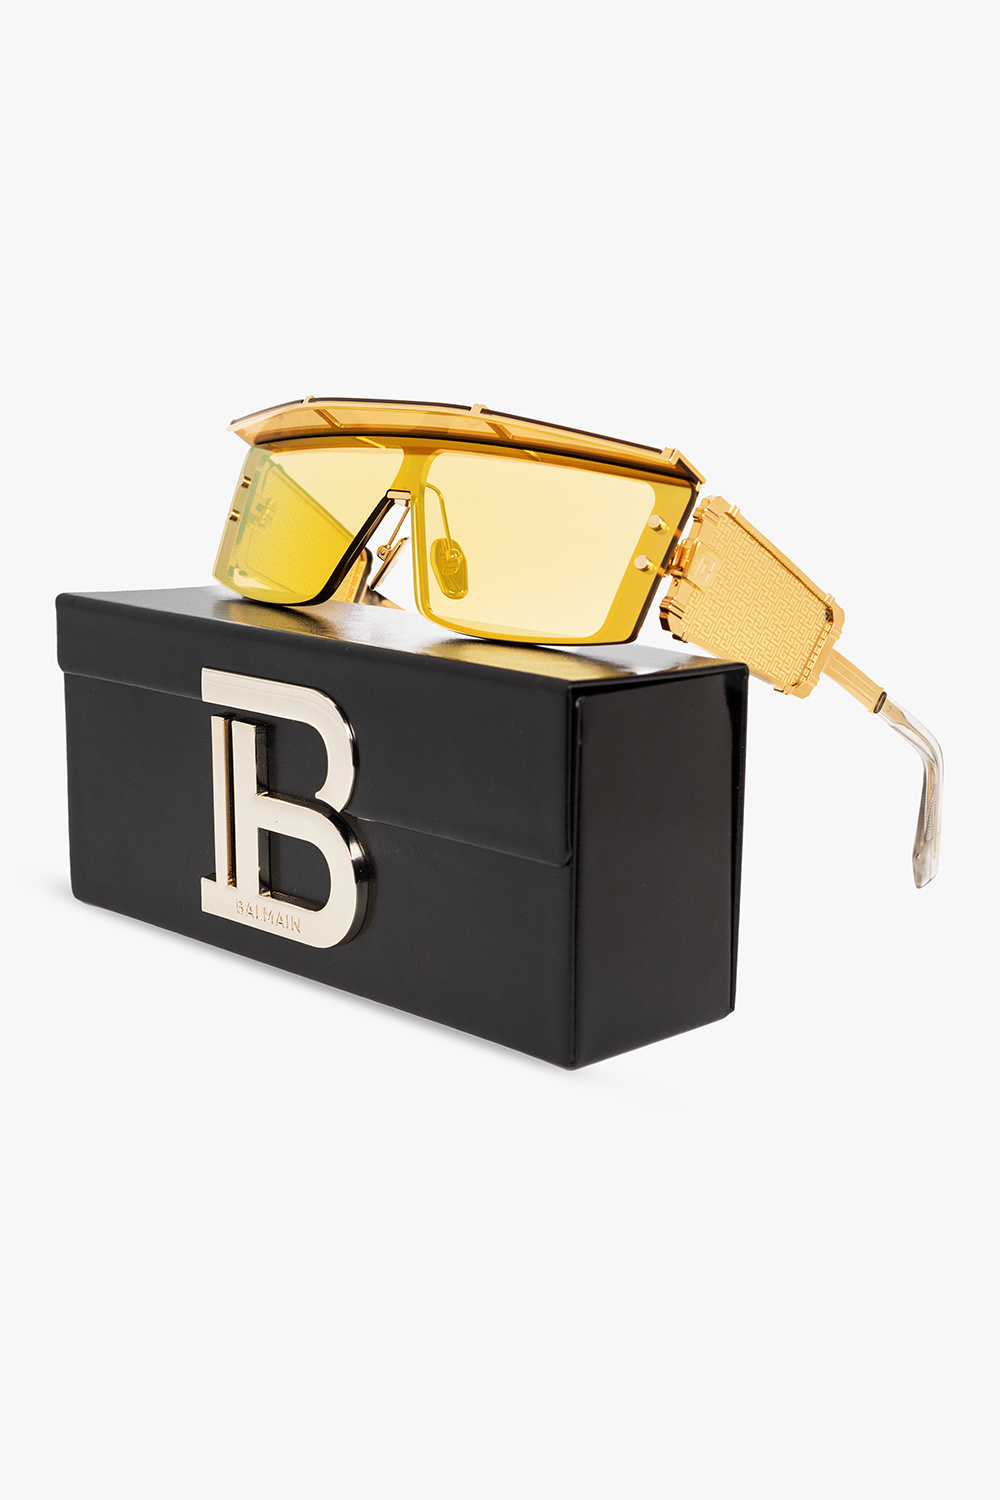 Balmain ‘Wonder Boy III’ sunglasses